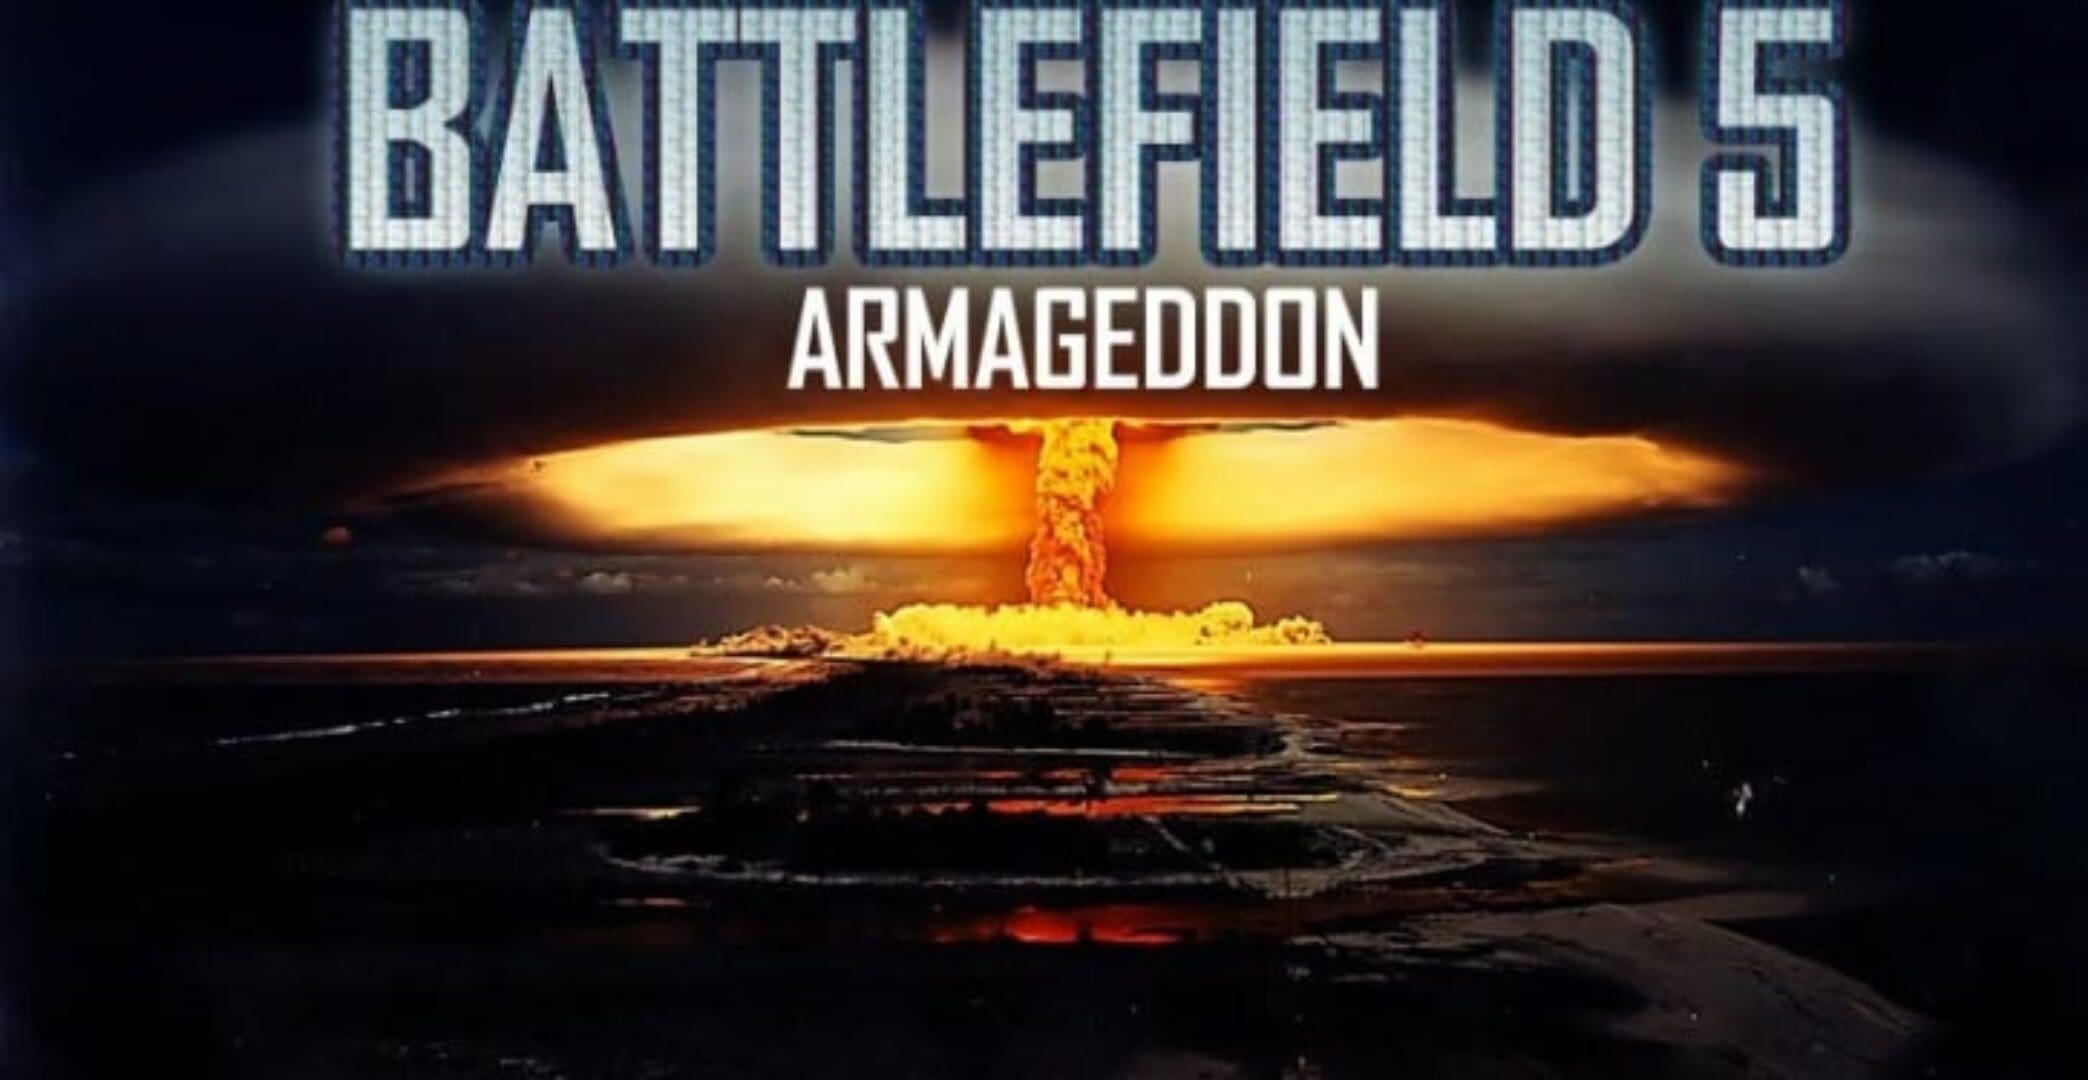 Did IMDB leak the game “Battlefield 5: Armageddon”?